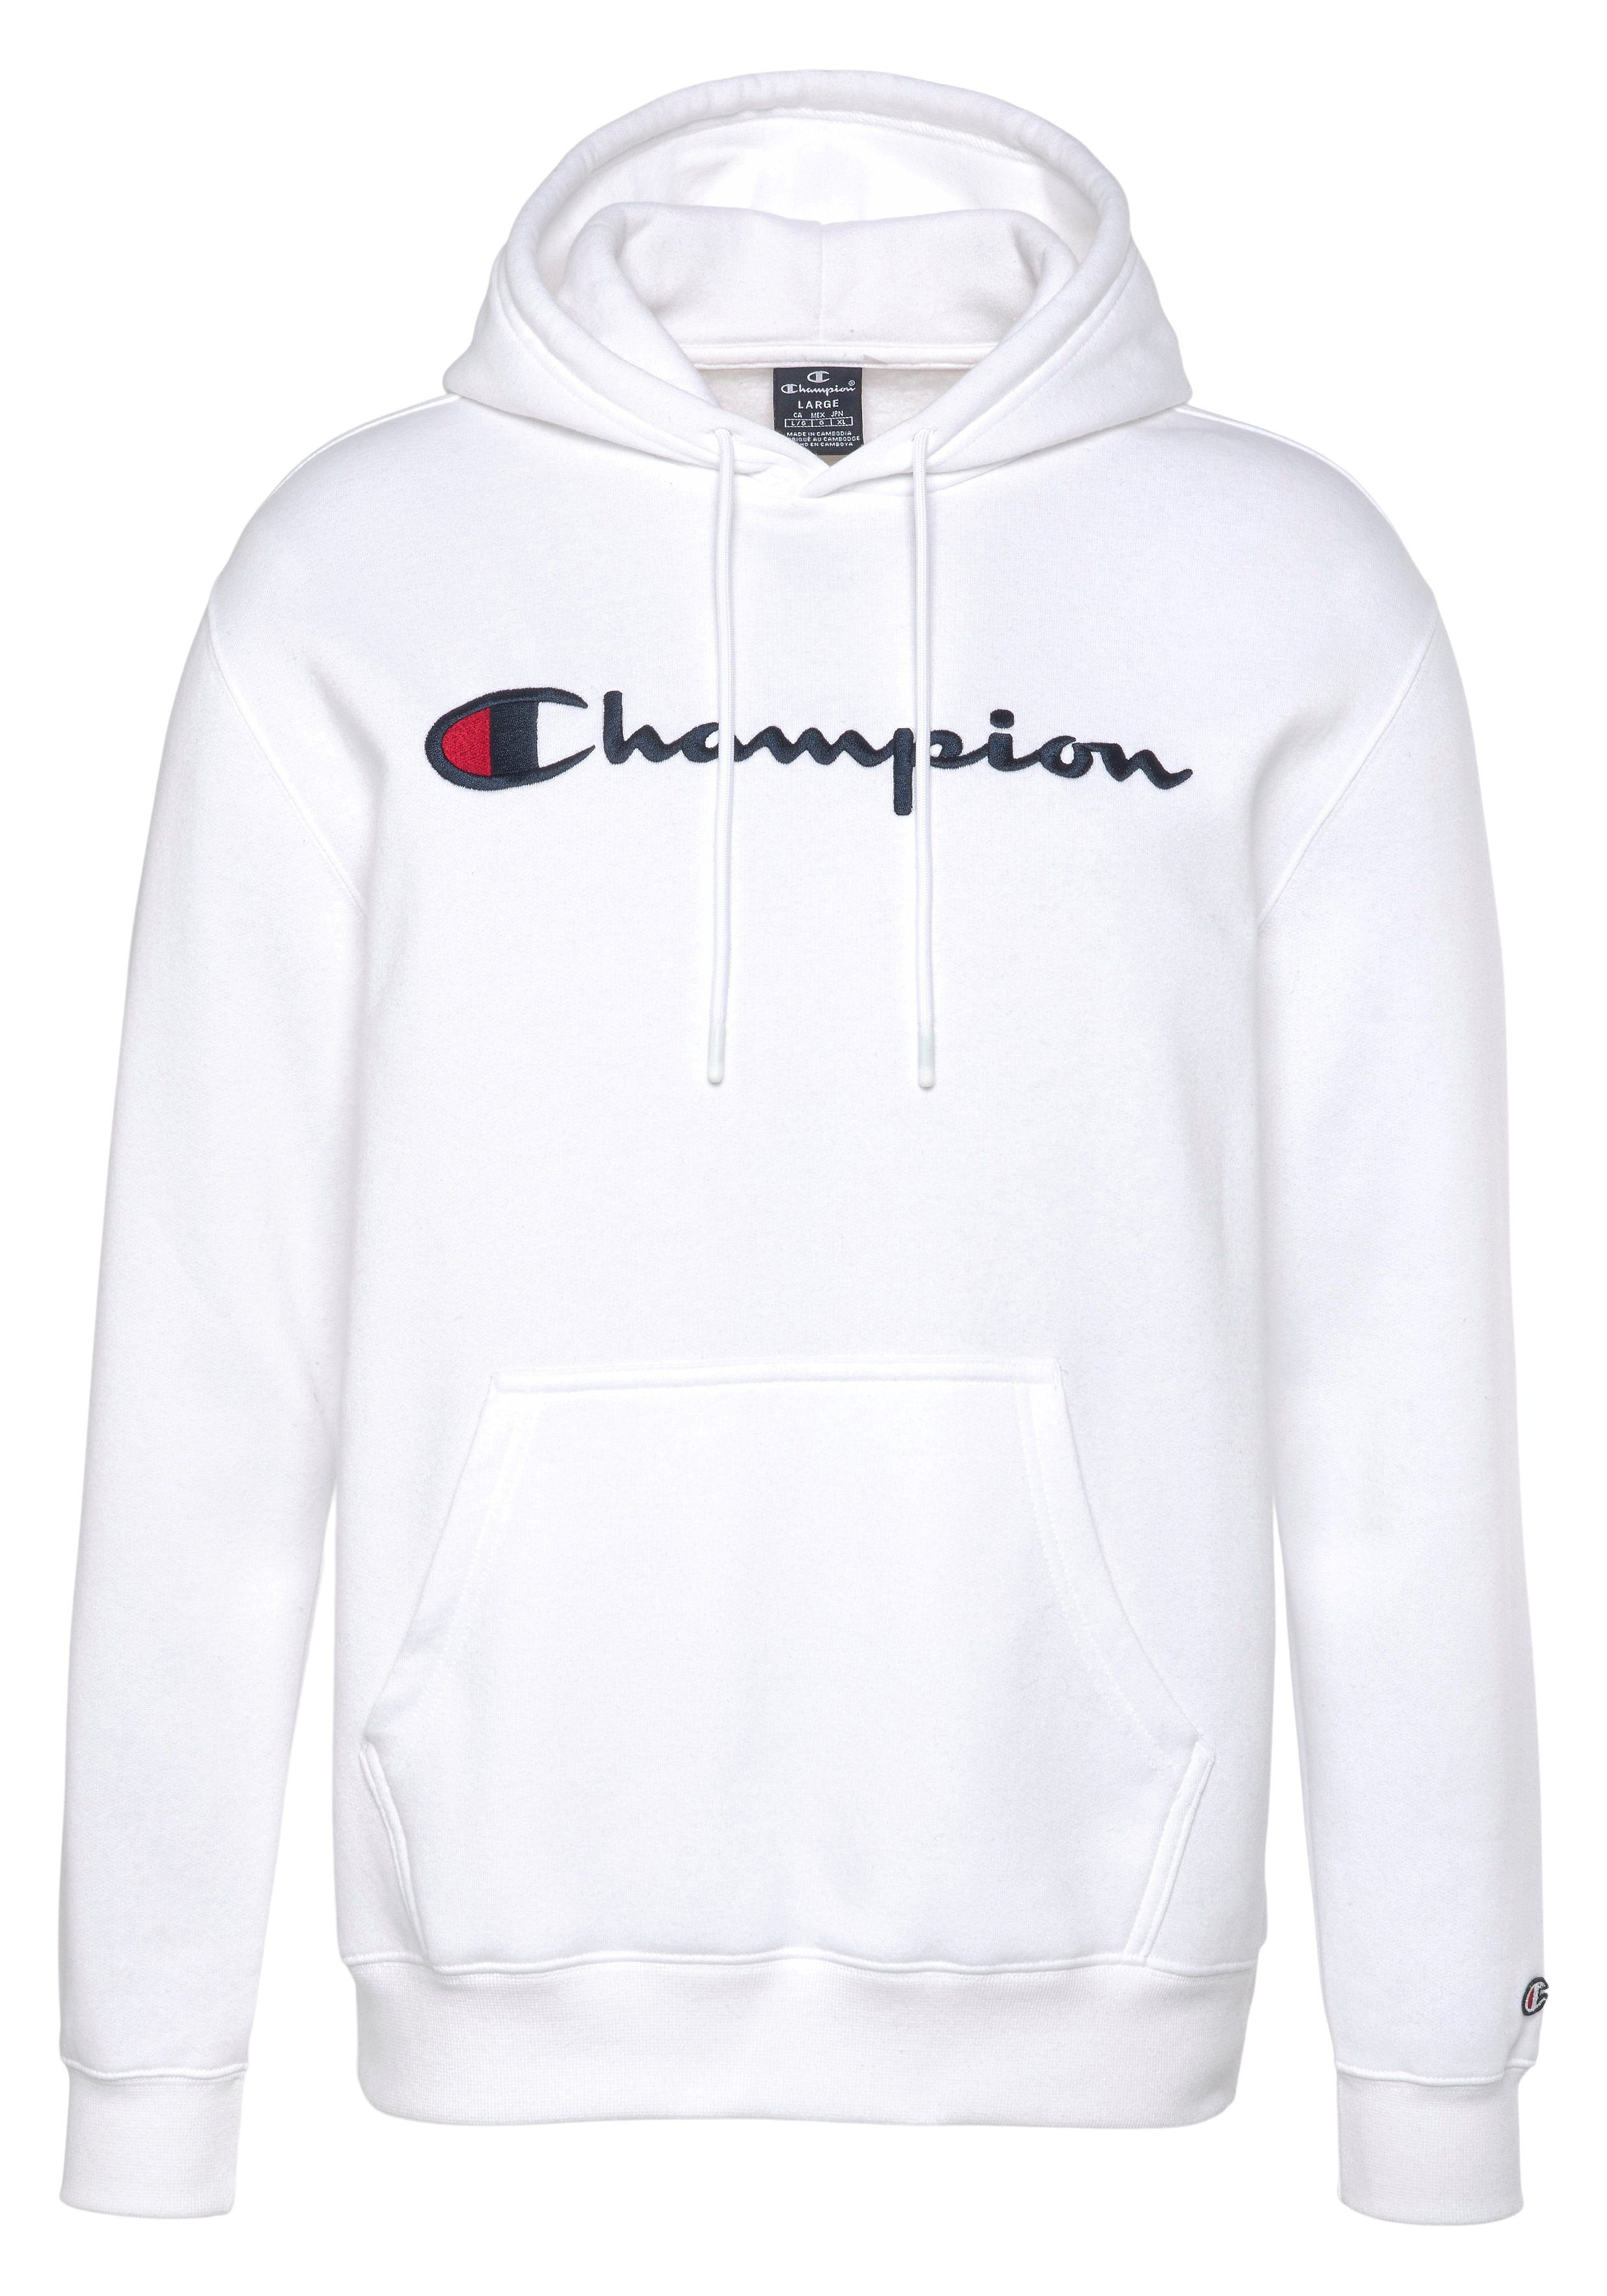 großer Verkauf Champion Sweatshirt Classic Hooded Sweatshirt weiß Log large